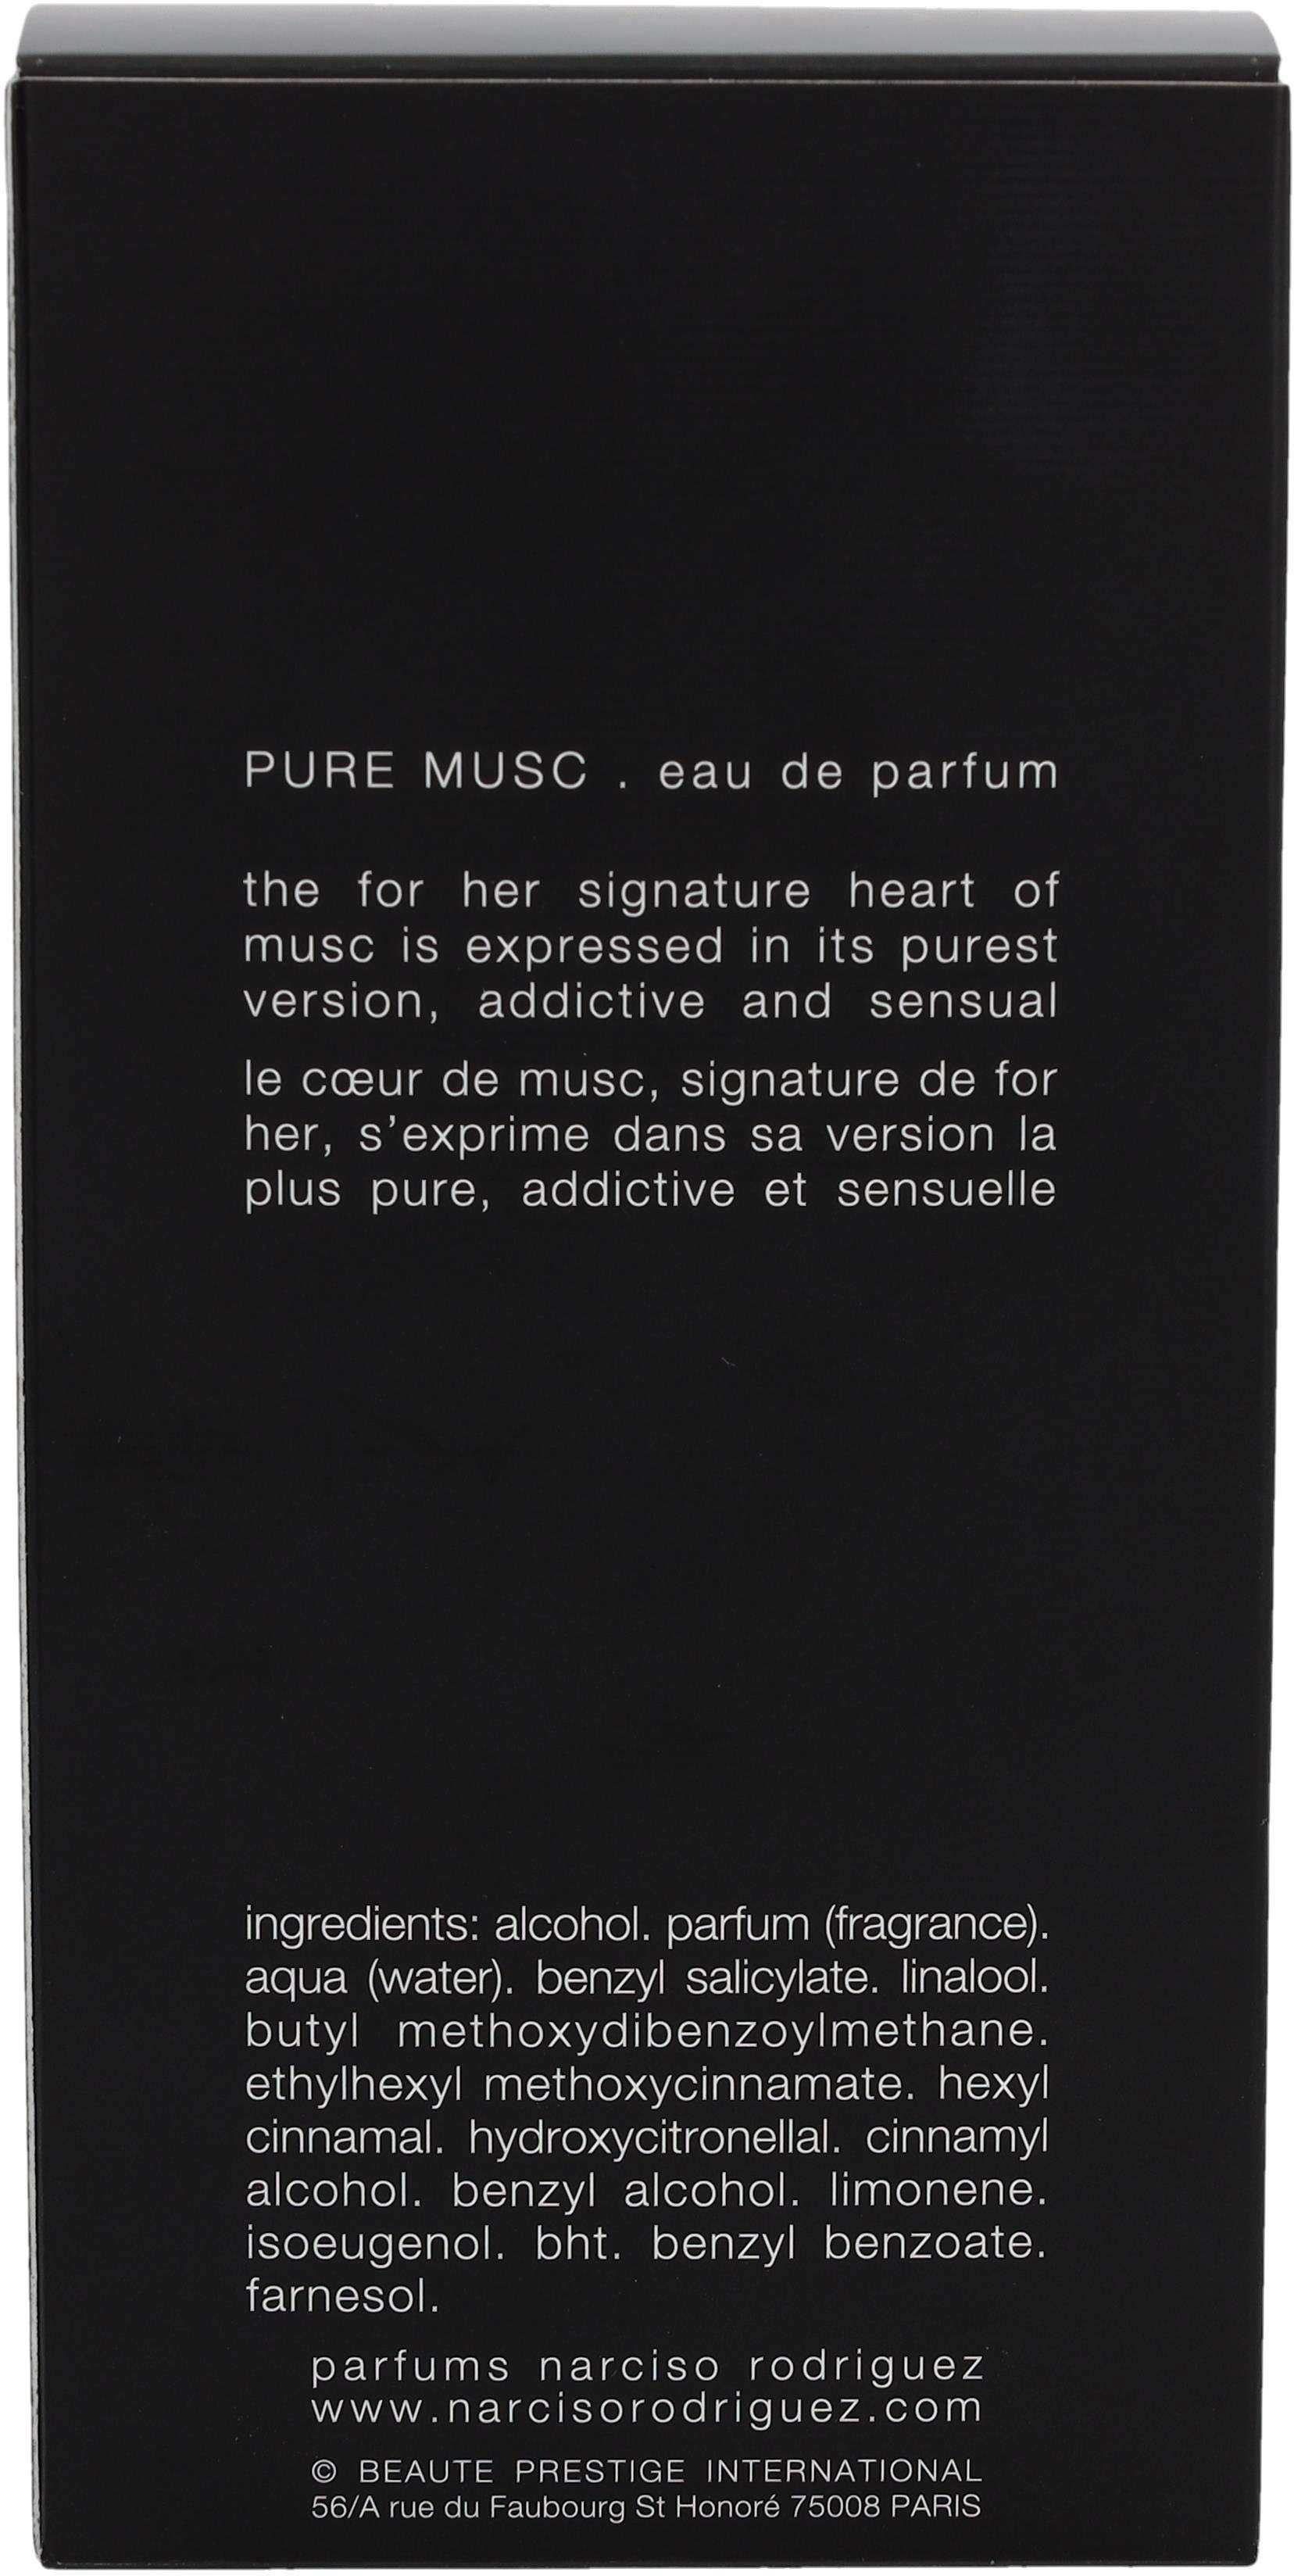 narciso rodriguez Musc Narciso de Eau Parfum Rodriguez for Pure Her